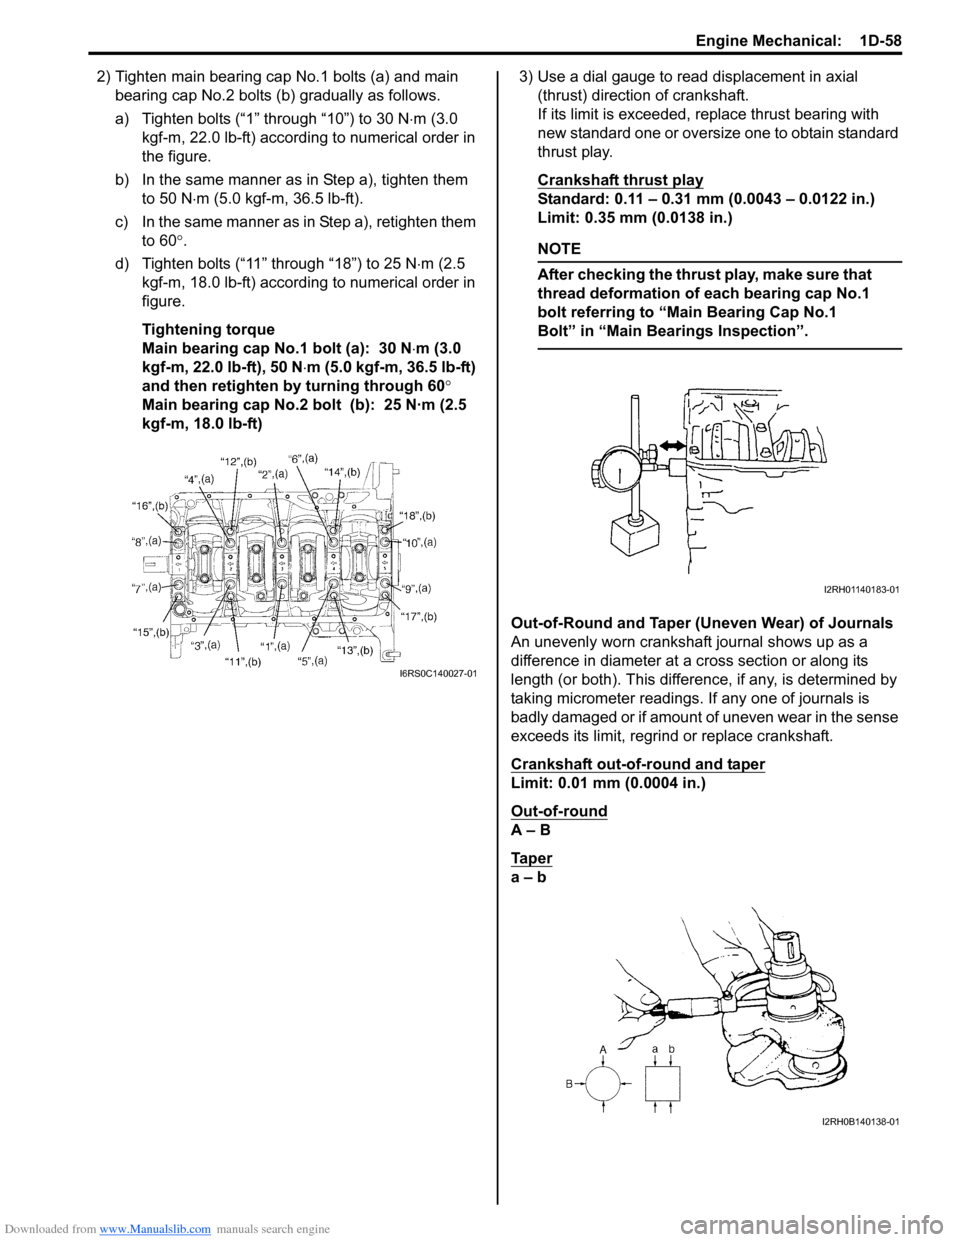 SUZUKI SWIFT 2008 2.G Service Service Manual Downloaded from www.Manualslib.com manuals search engine Engine Mechanical:  1D-58
2) Tighten main bearing cap No.1 bolts (a) and main bearing cap No.2 bolts (b ) gradually as follows.
a) Tighten bolt